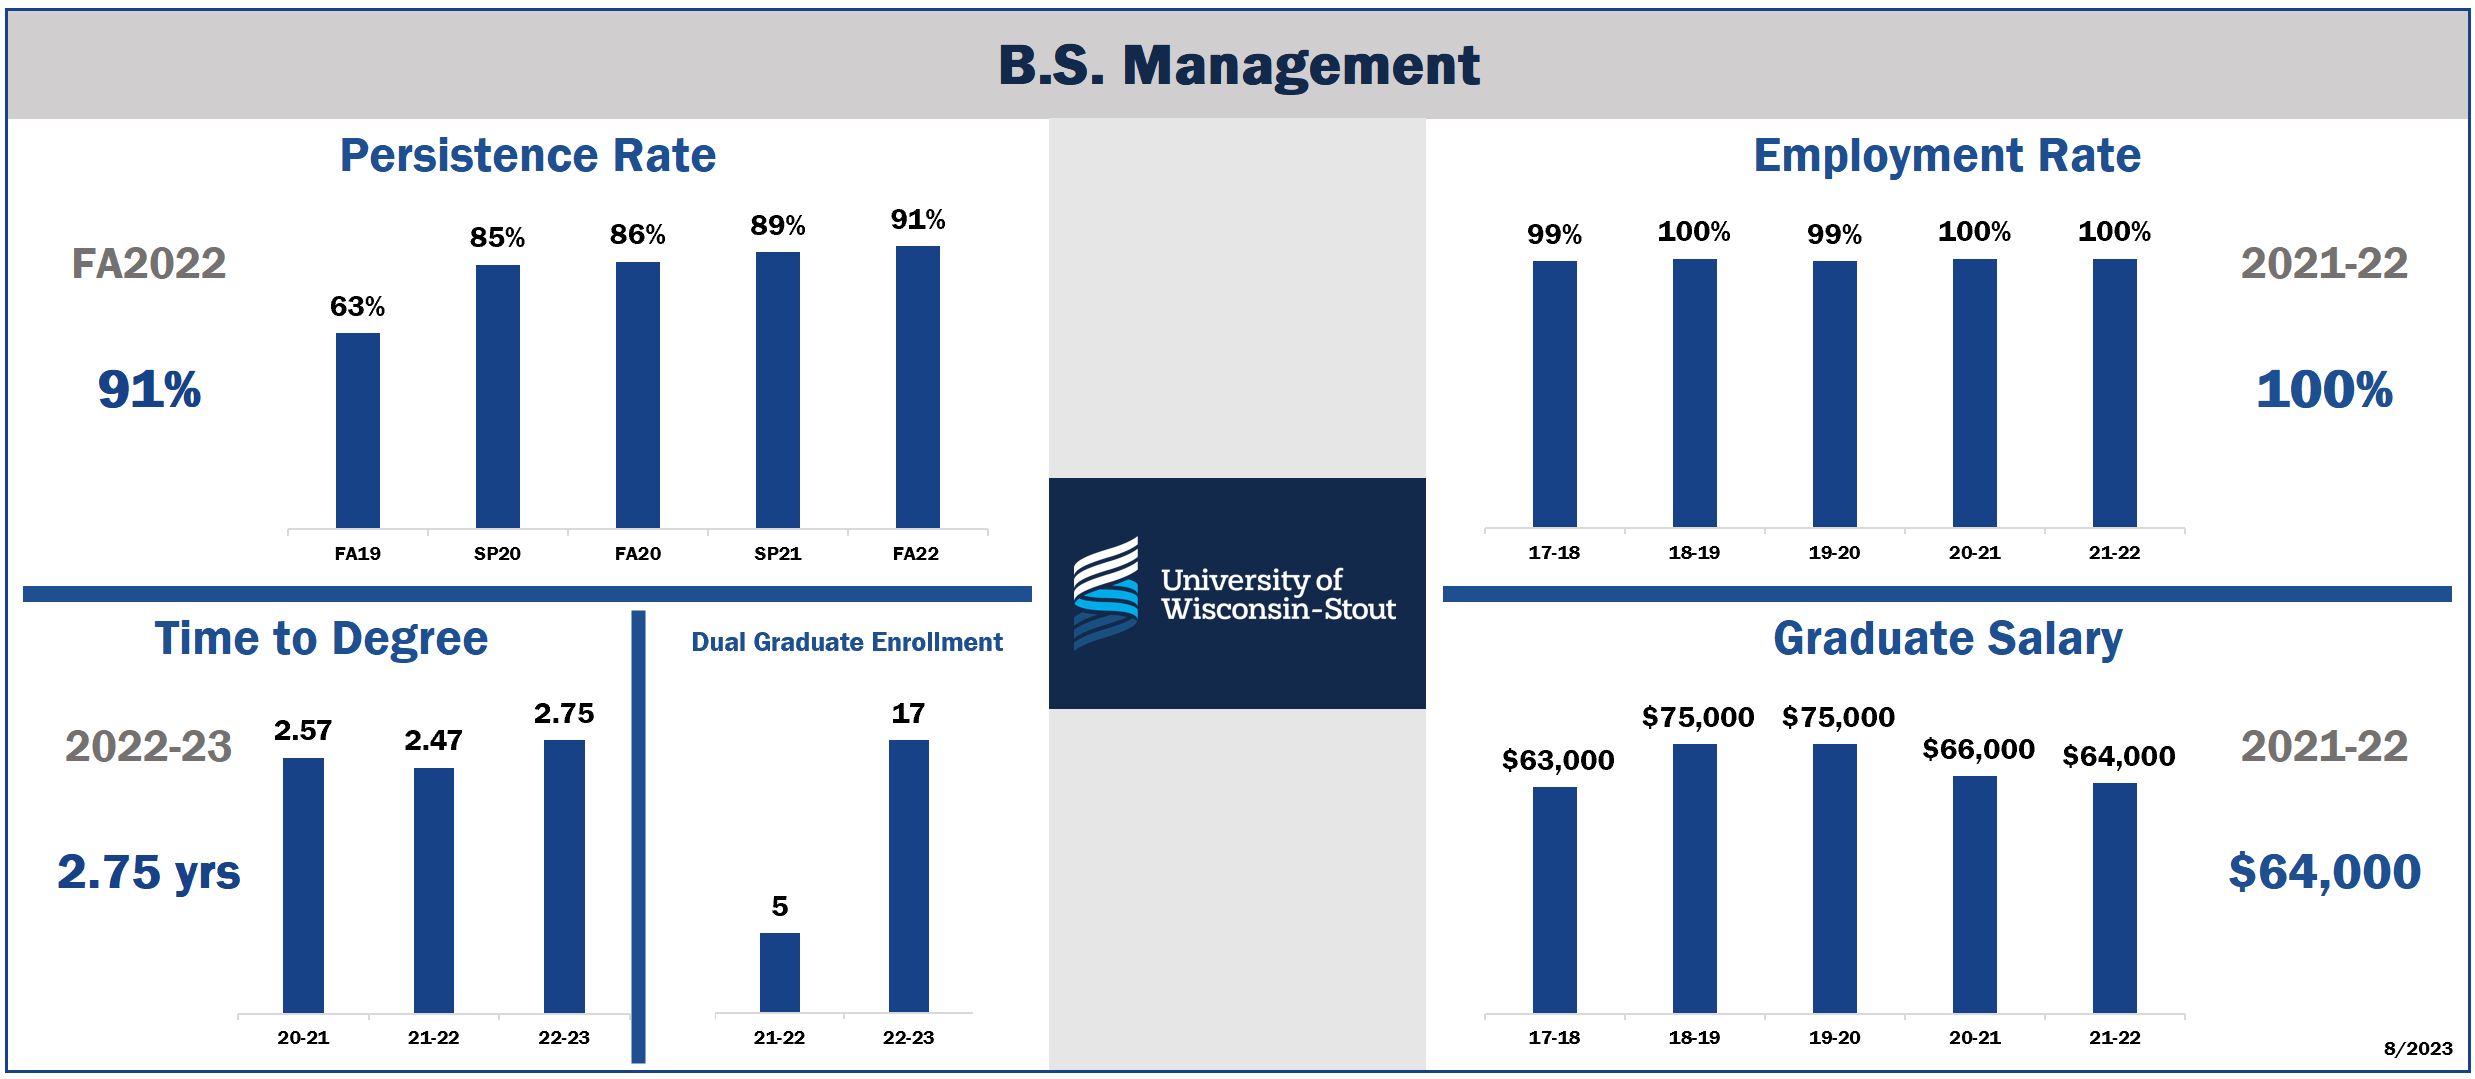 B.S. Management Student Data